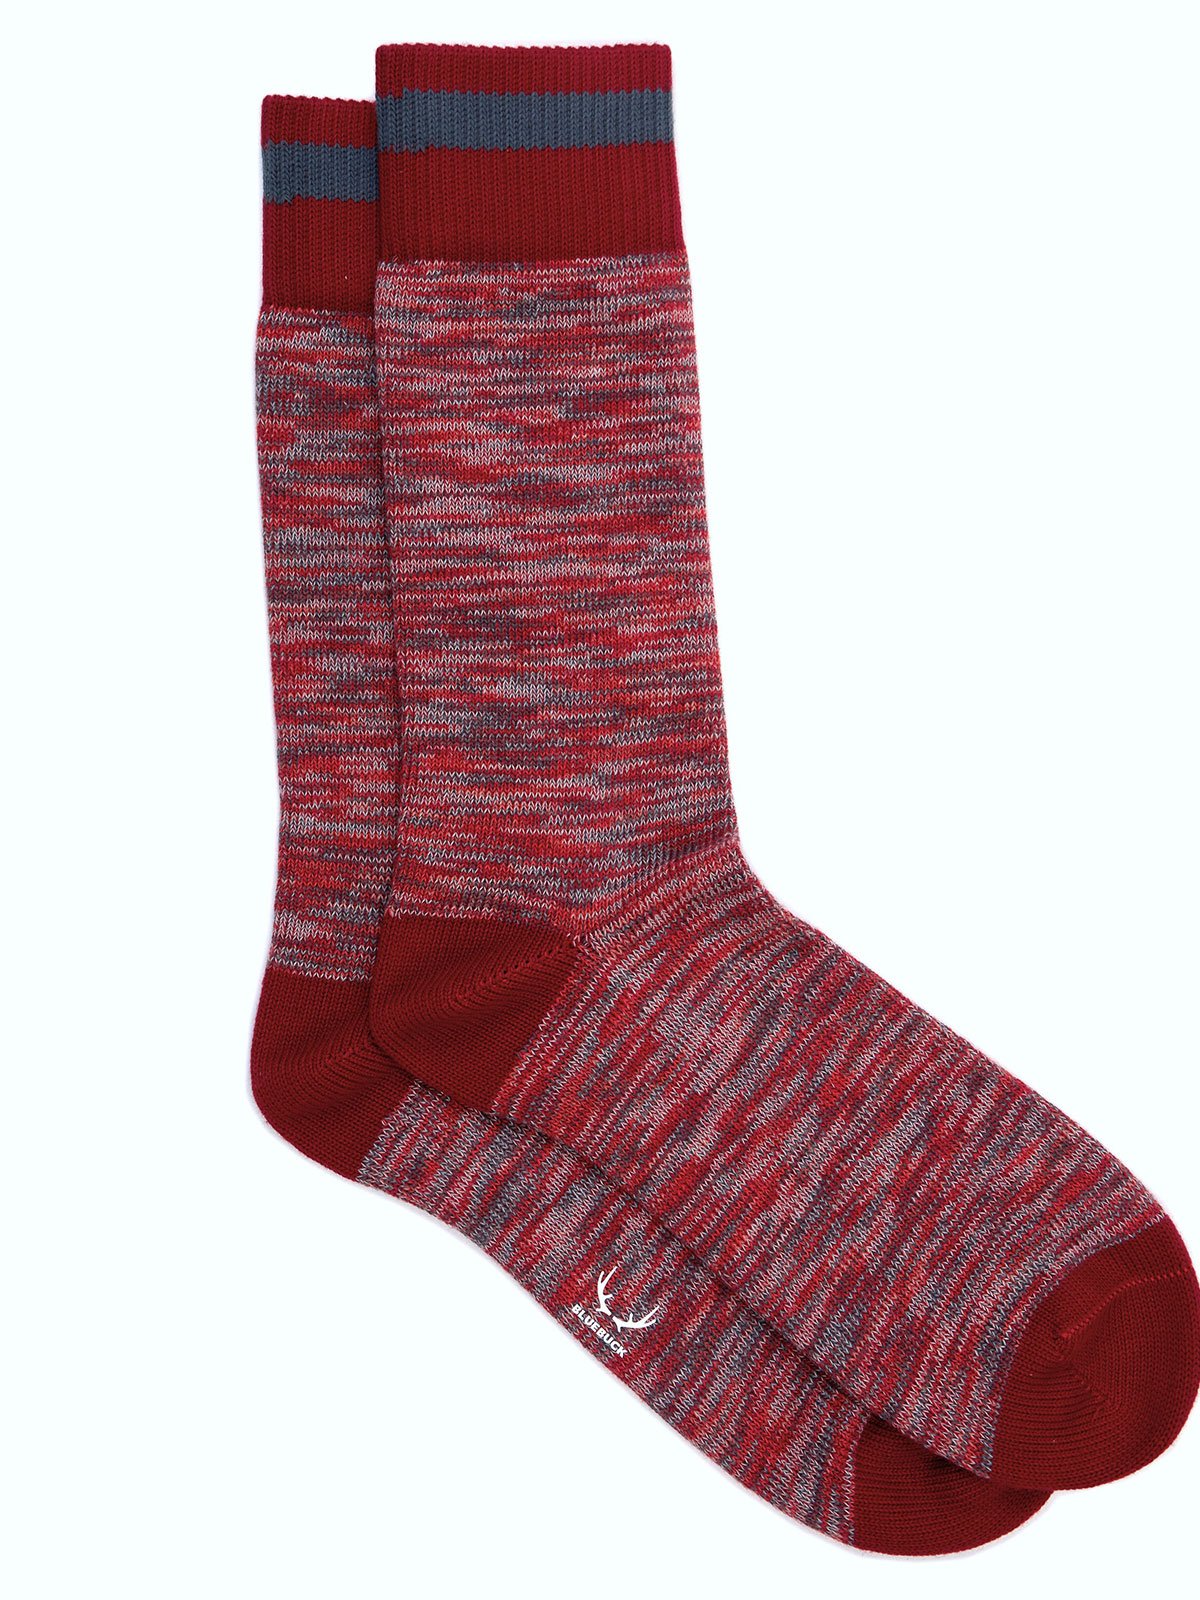 Nautical Socks | Red/Grey